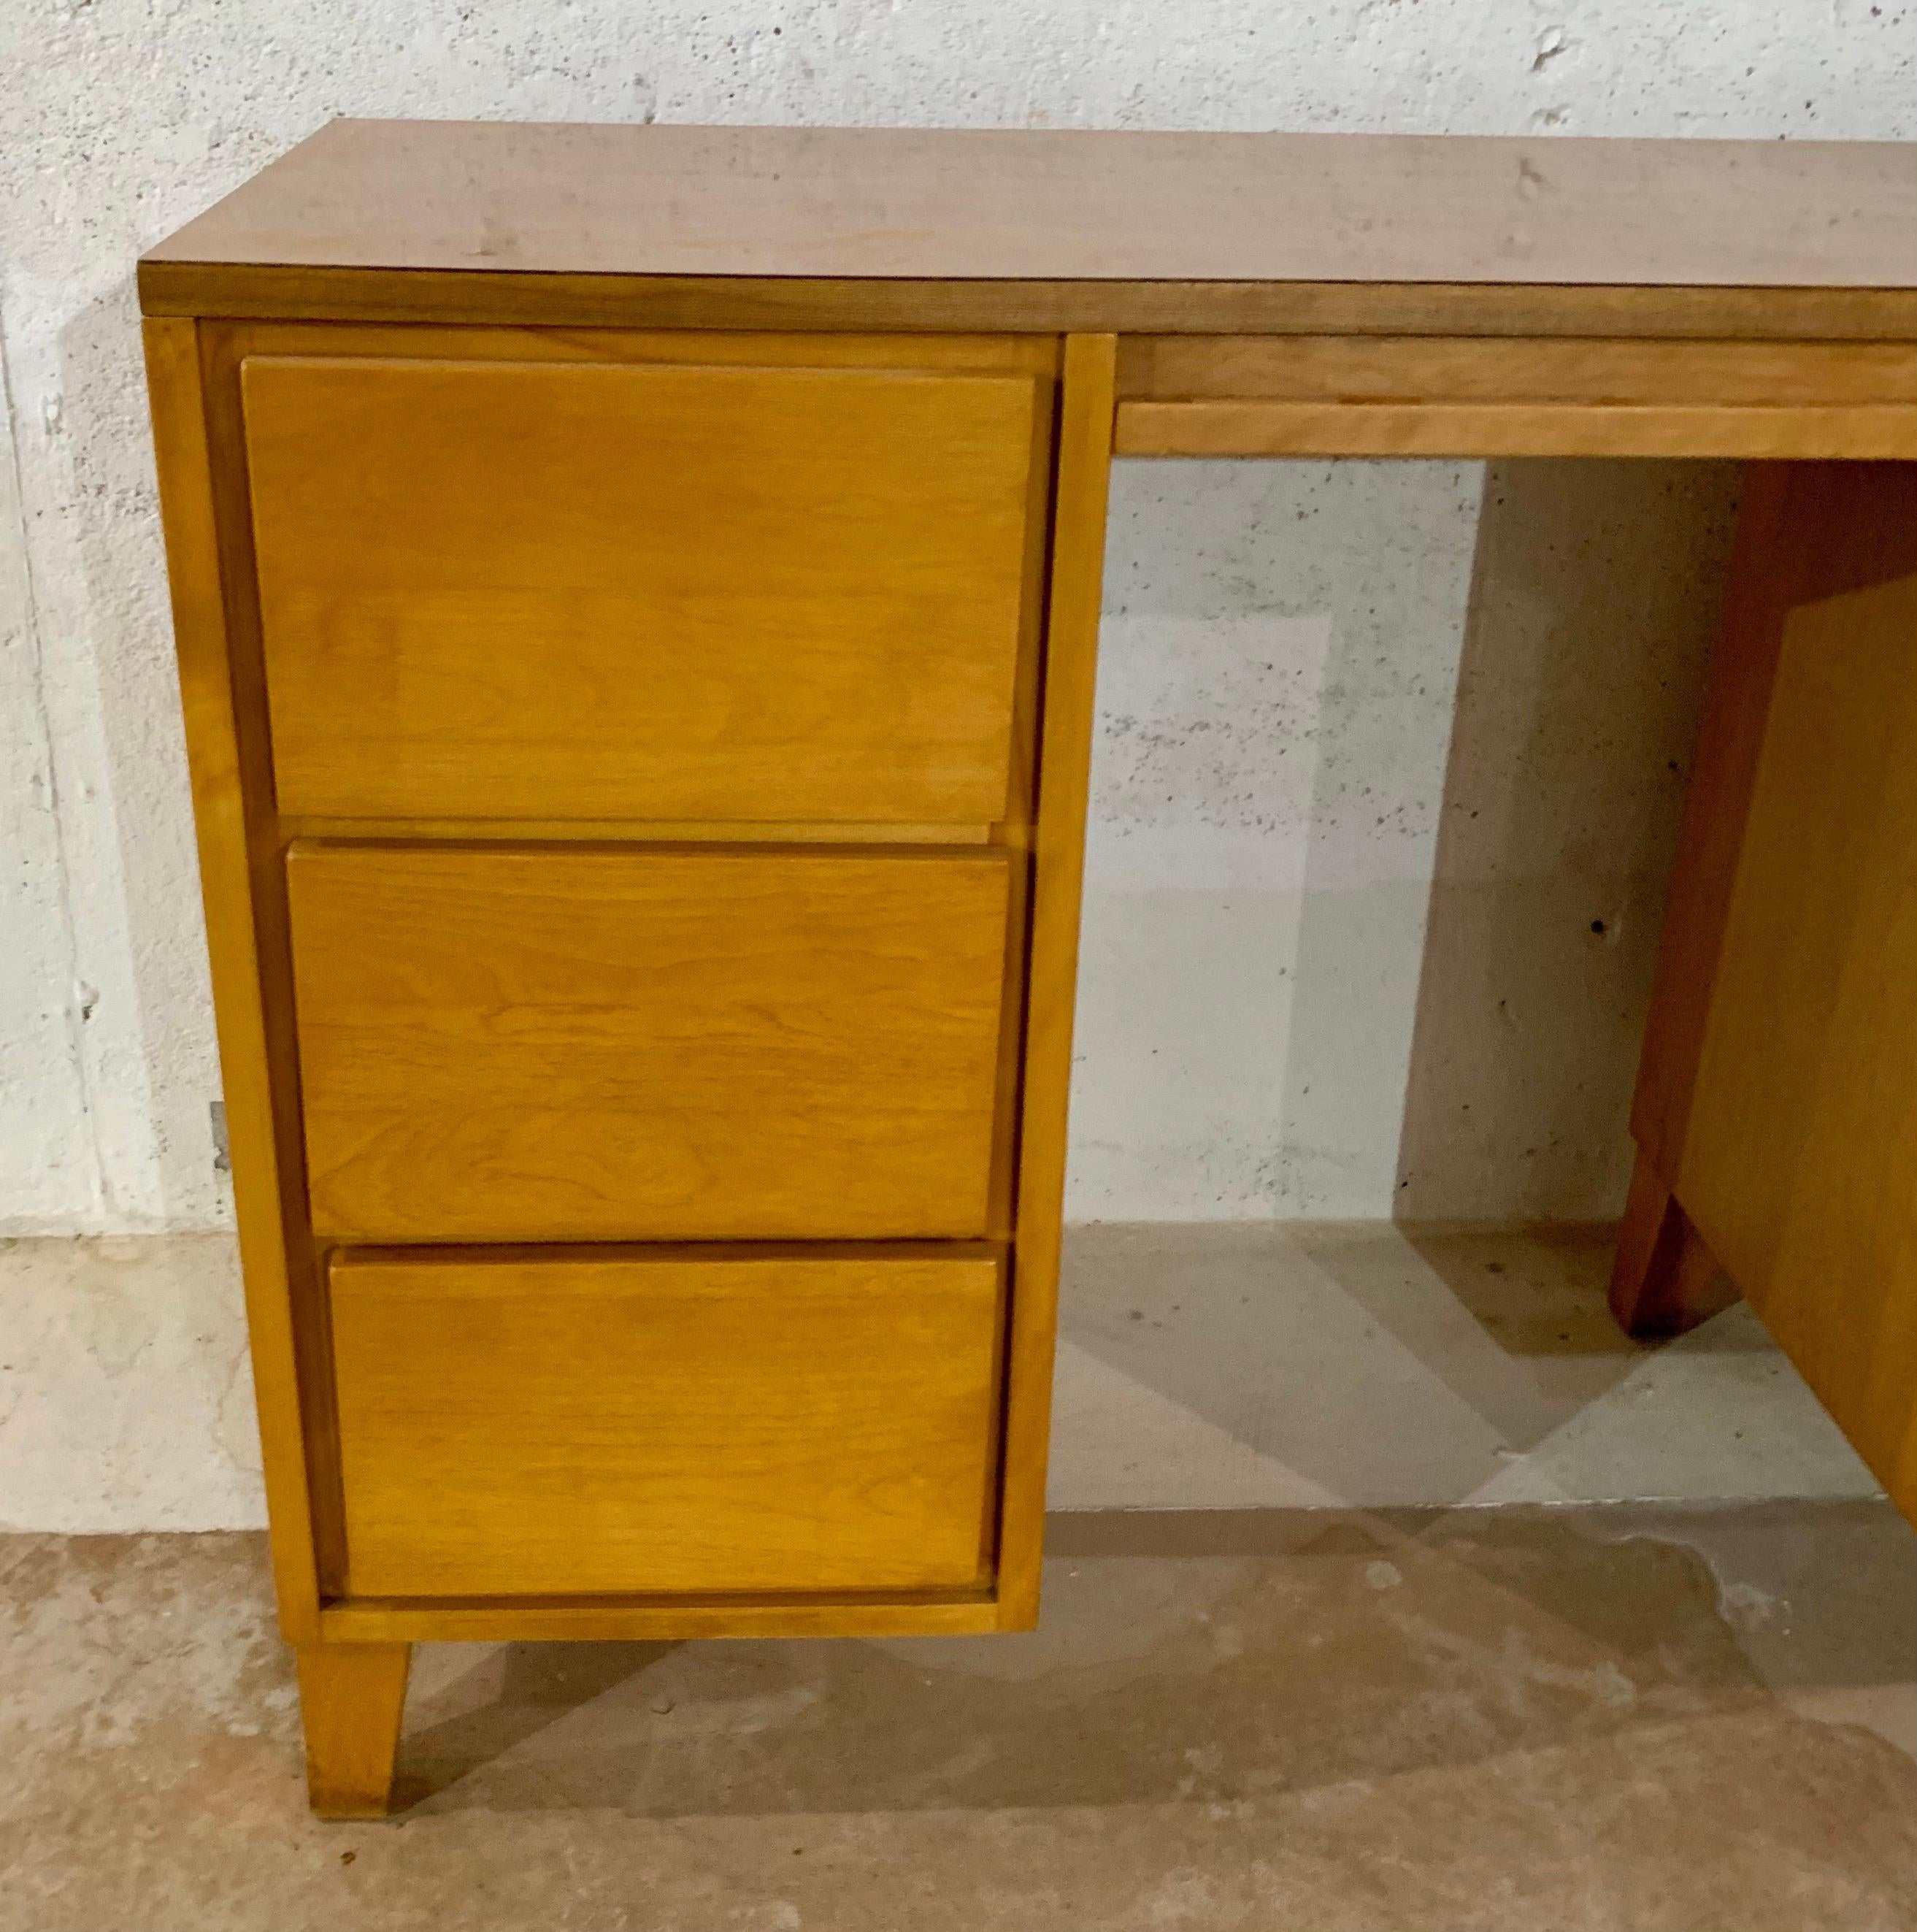 American Mid-Century Modern Kneehole Double Pedestal Desk Writing Table